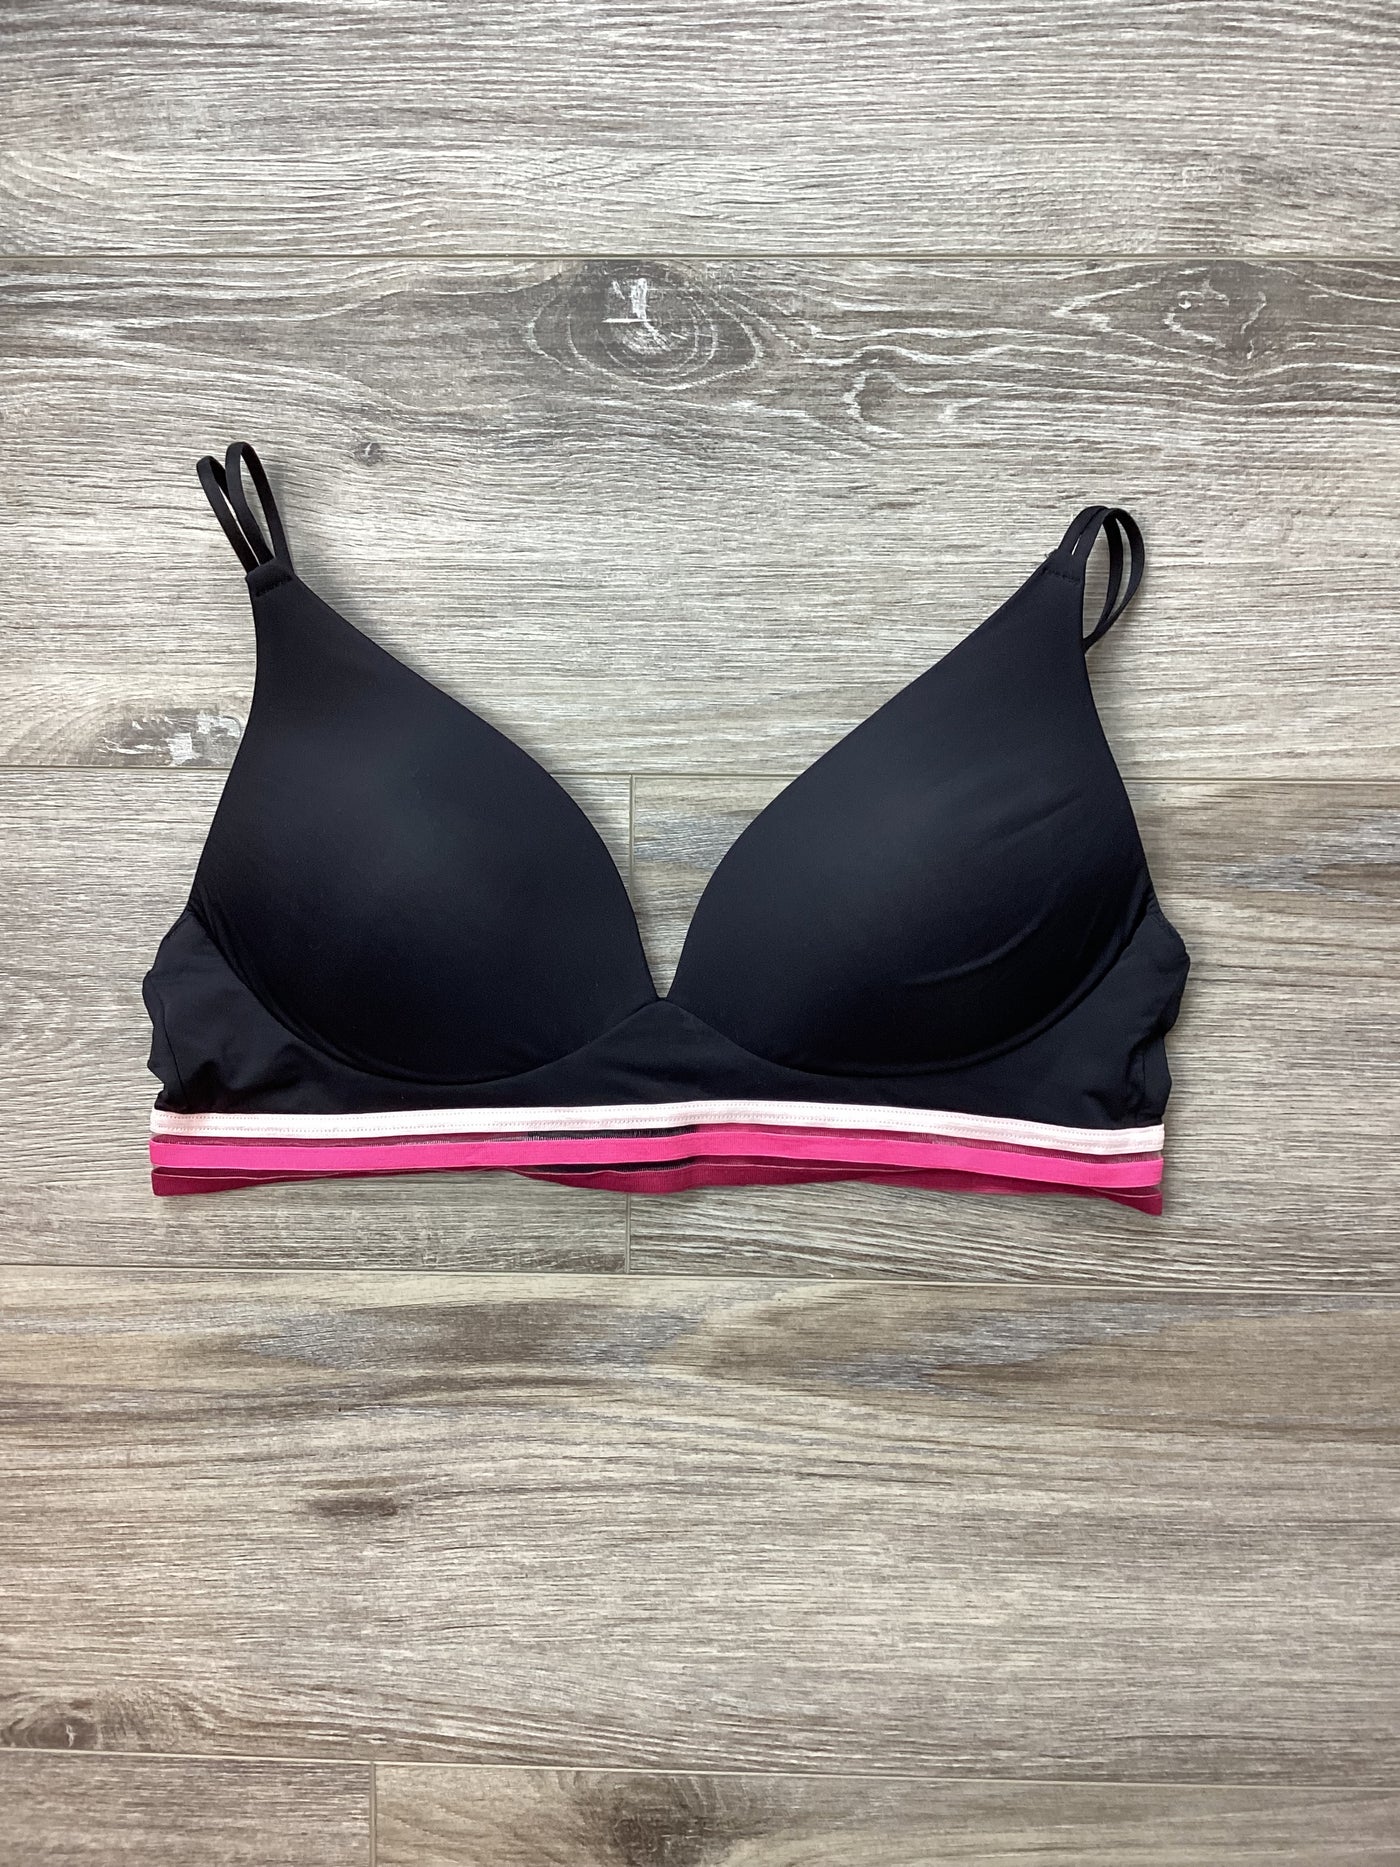 John Lewis black non-wired bra with pink trim - Size 36B